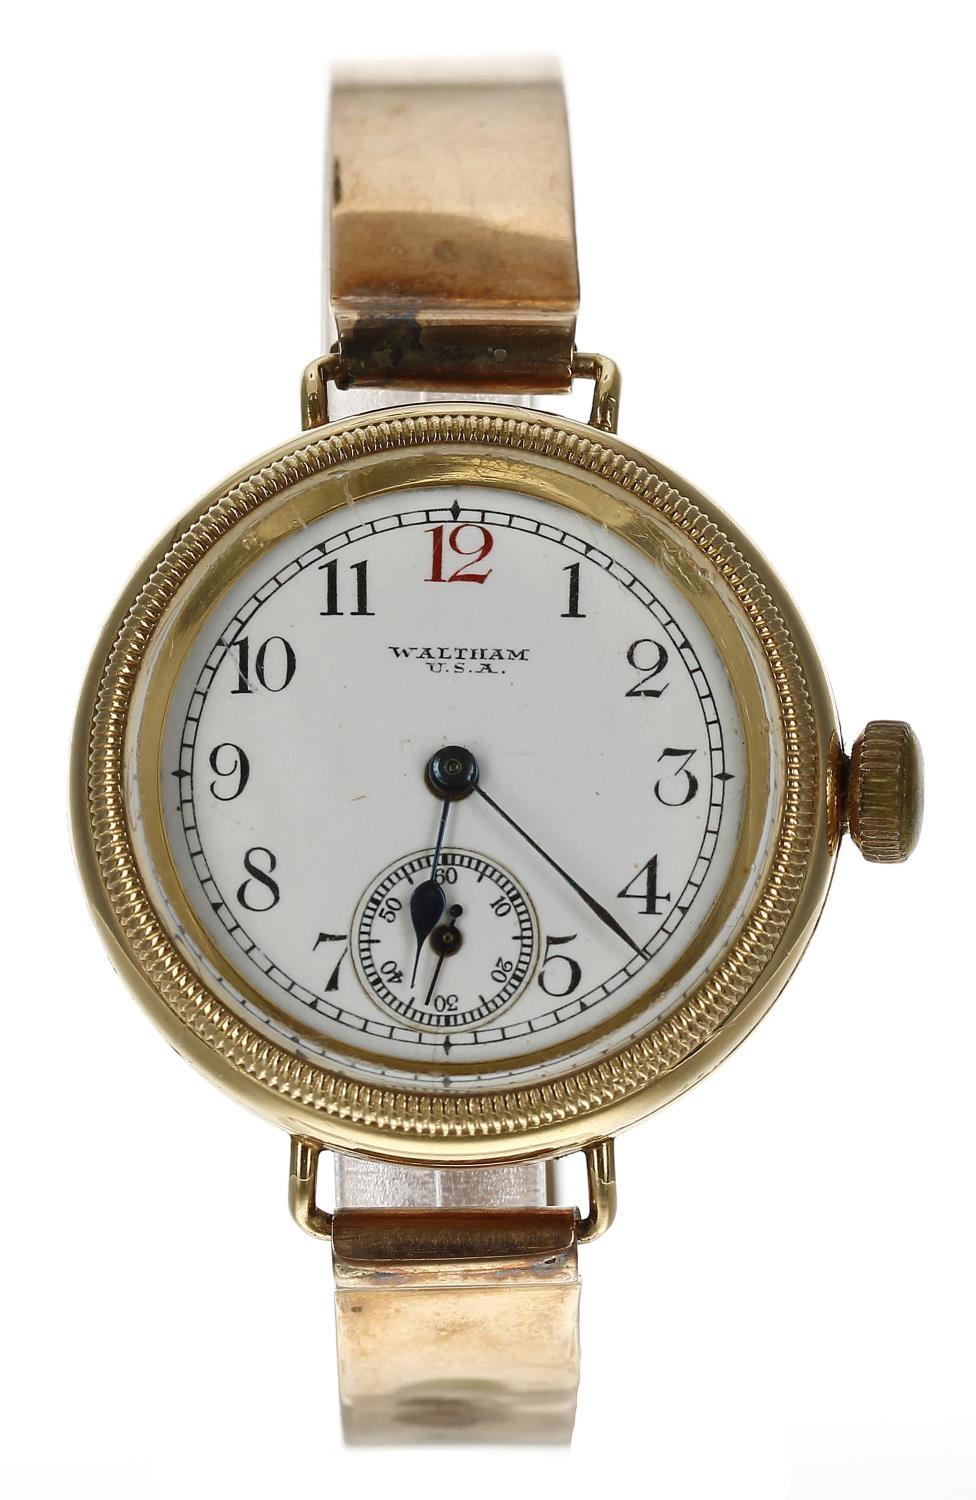 Waltham 18ct wire-lug wristwatch, case no. 301494, serial no. 25452515, circa 1926, signed dial with